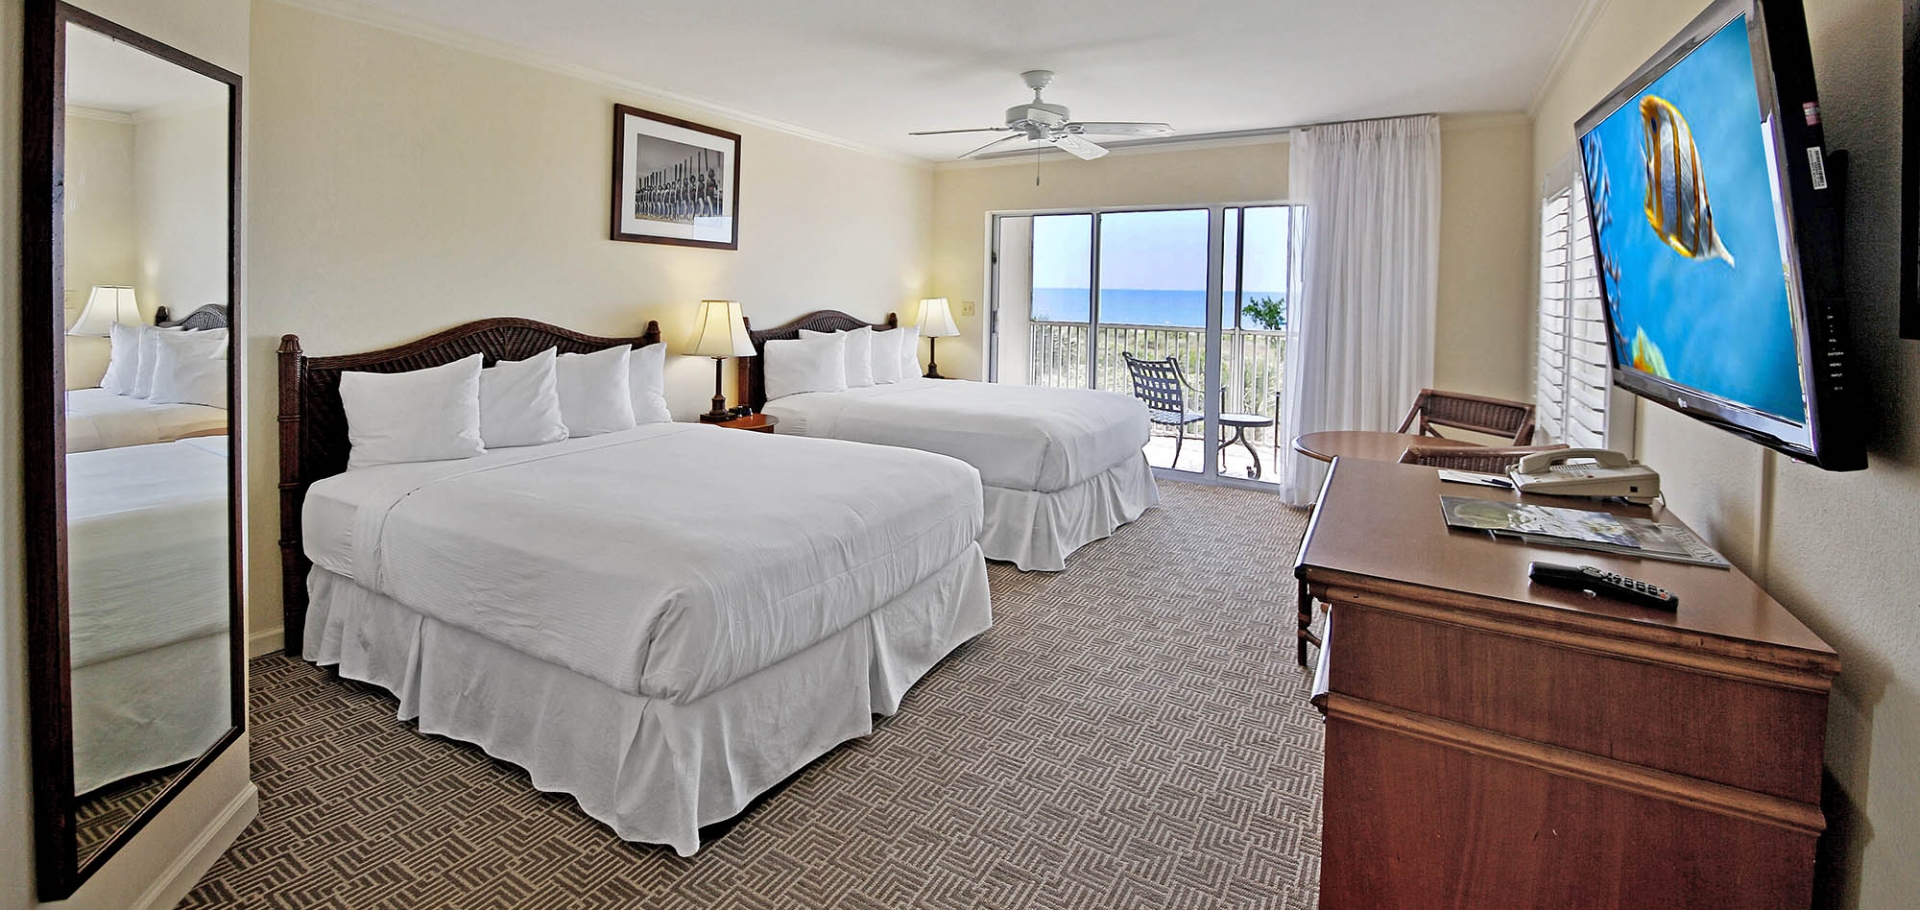 Sanibel Seaside Inn bedroom and balcony view